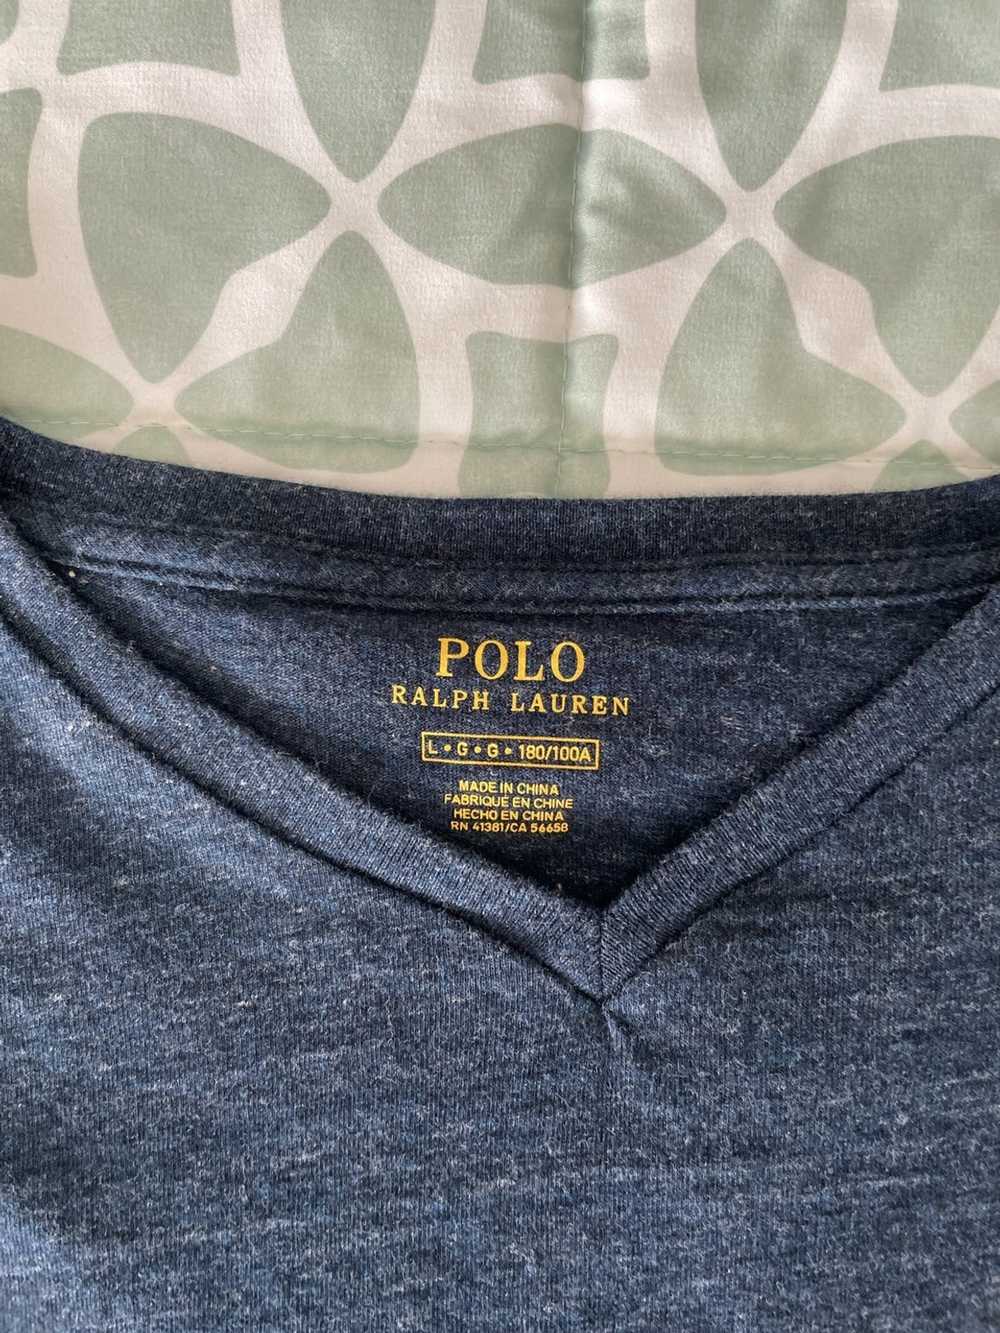 Polo Ralph Lauren Polo T-shirt short sleeve V-neck - image 3